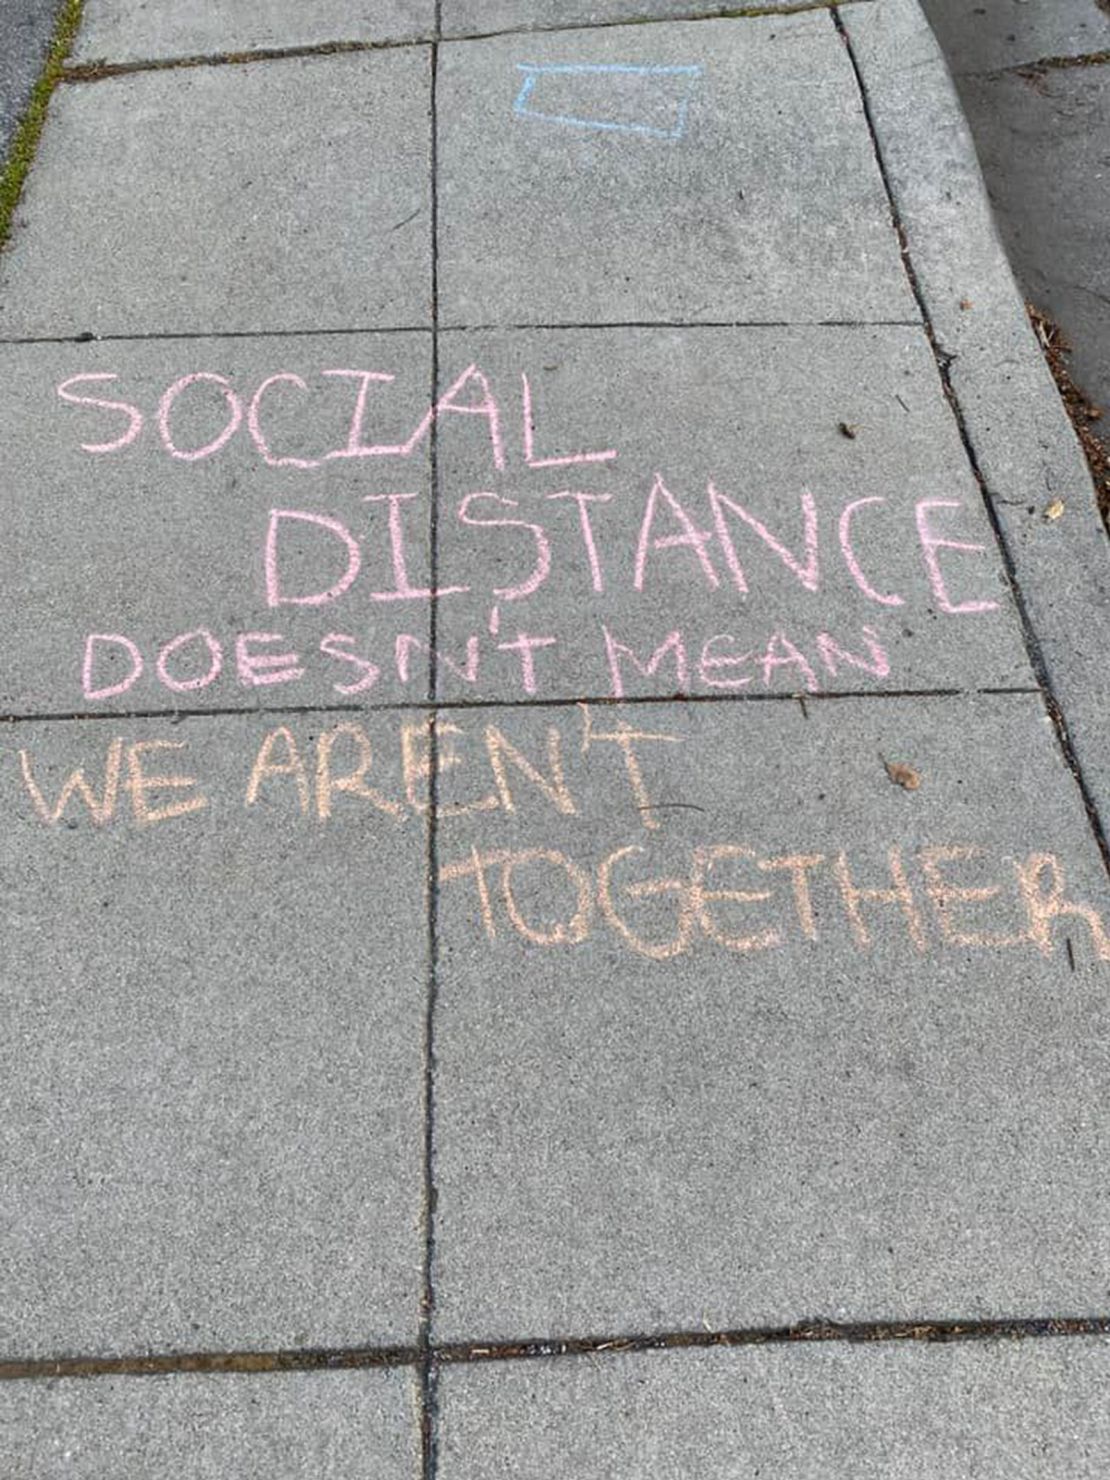 Sidewalk chalk brings color, togetherness for one Ames neighborhood